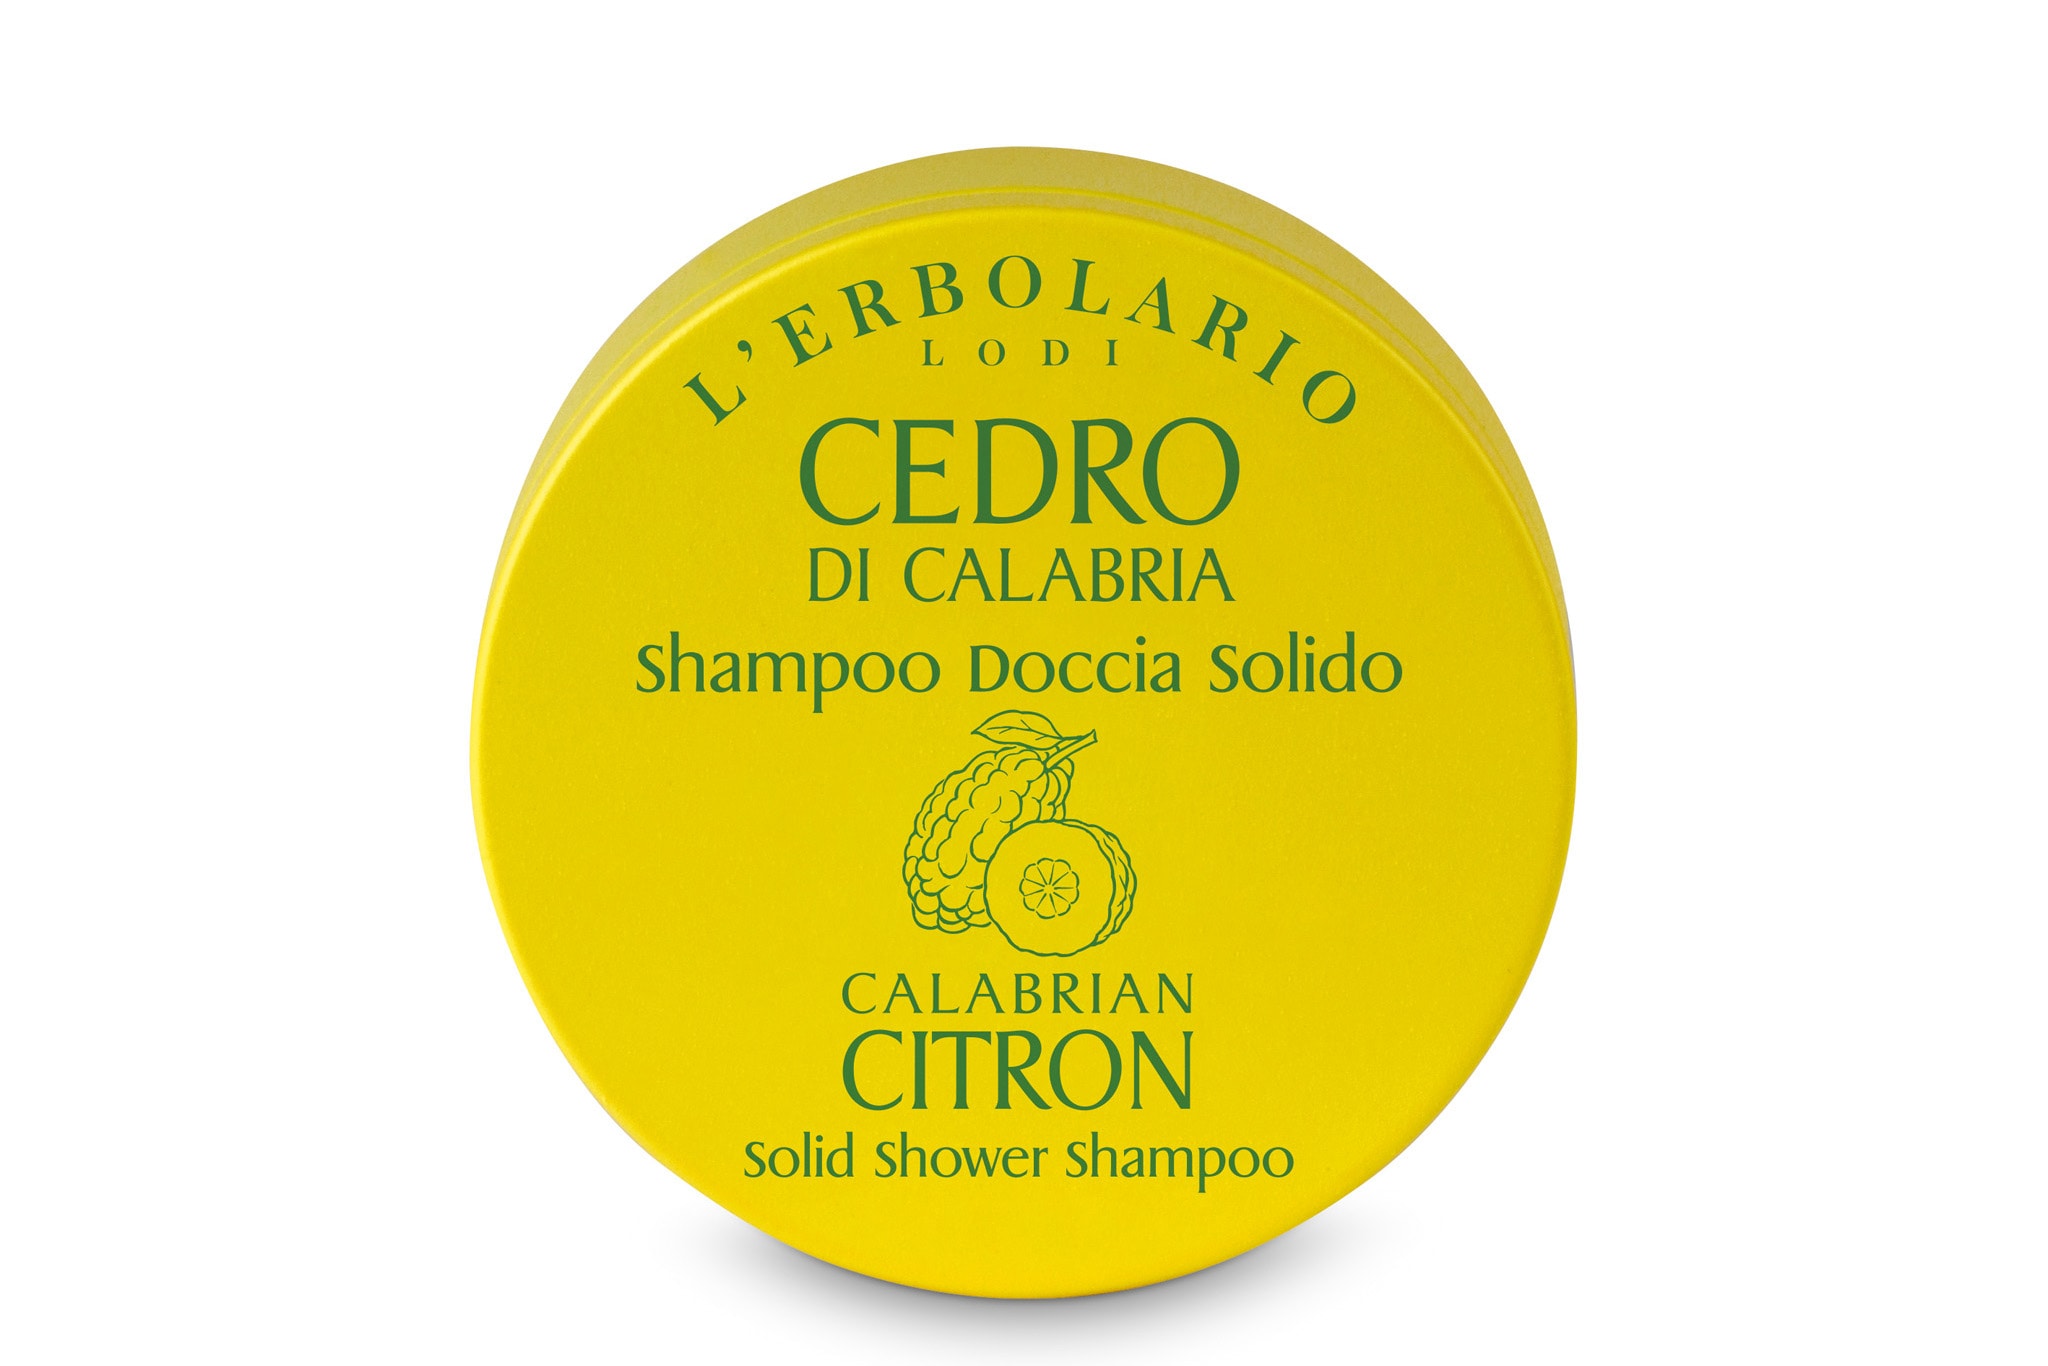 Shampoo solido al cedro, L'ERBOLARIO (6,90 €).